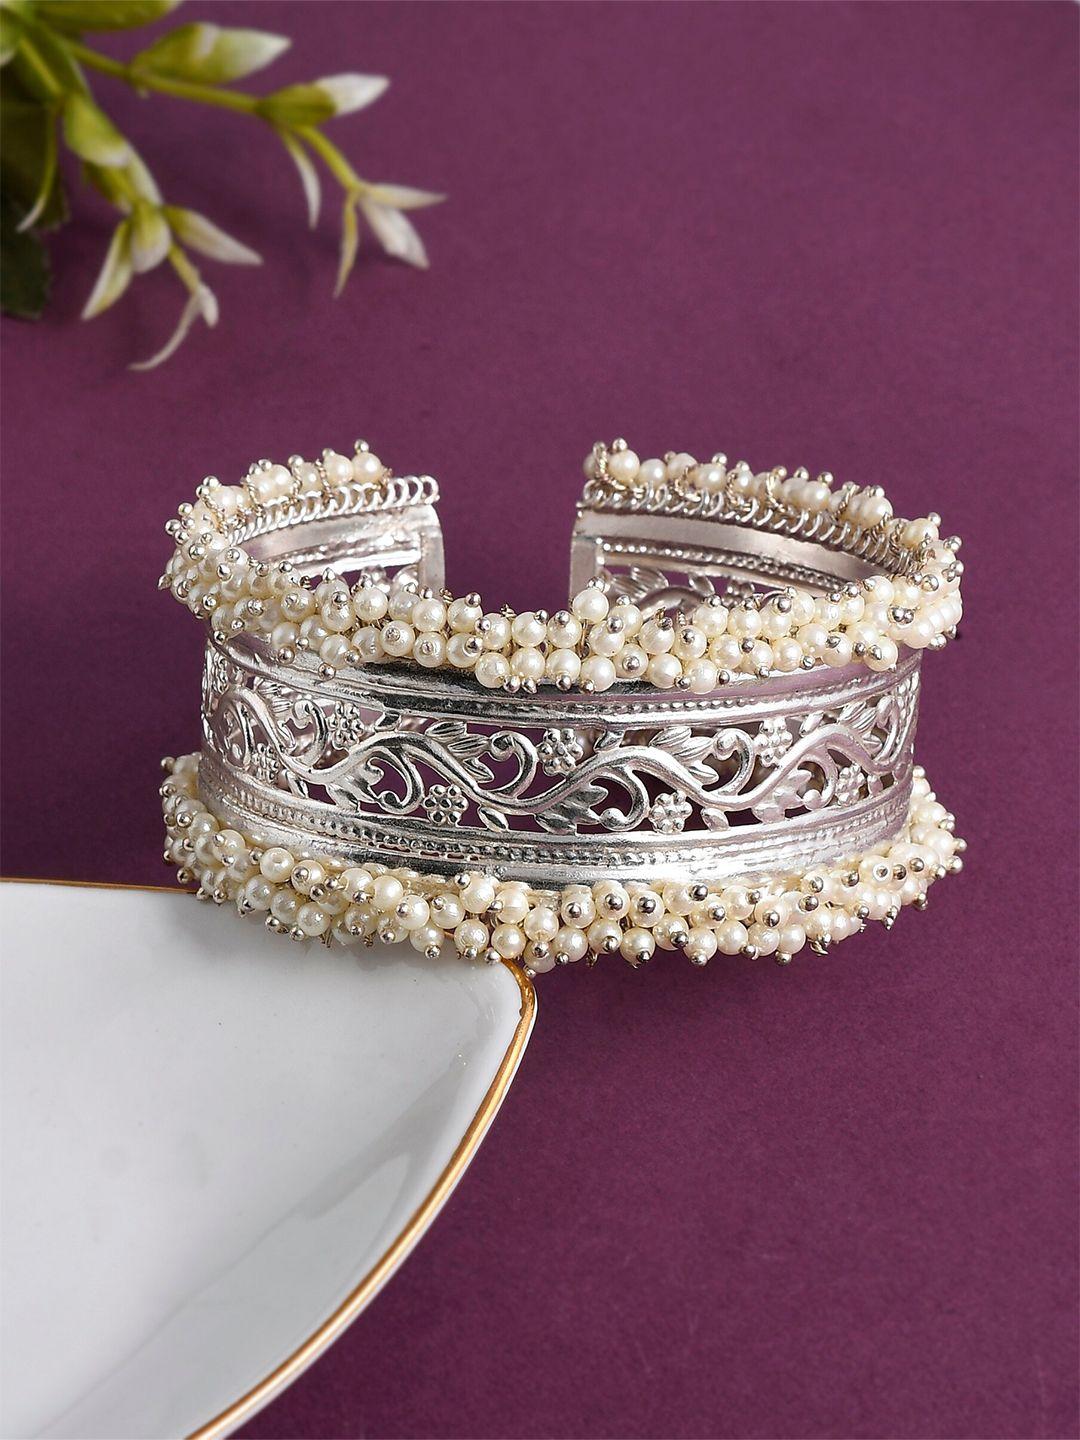 silvermerc designs women brass enamelled silver-plated bangle-style bracelet